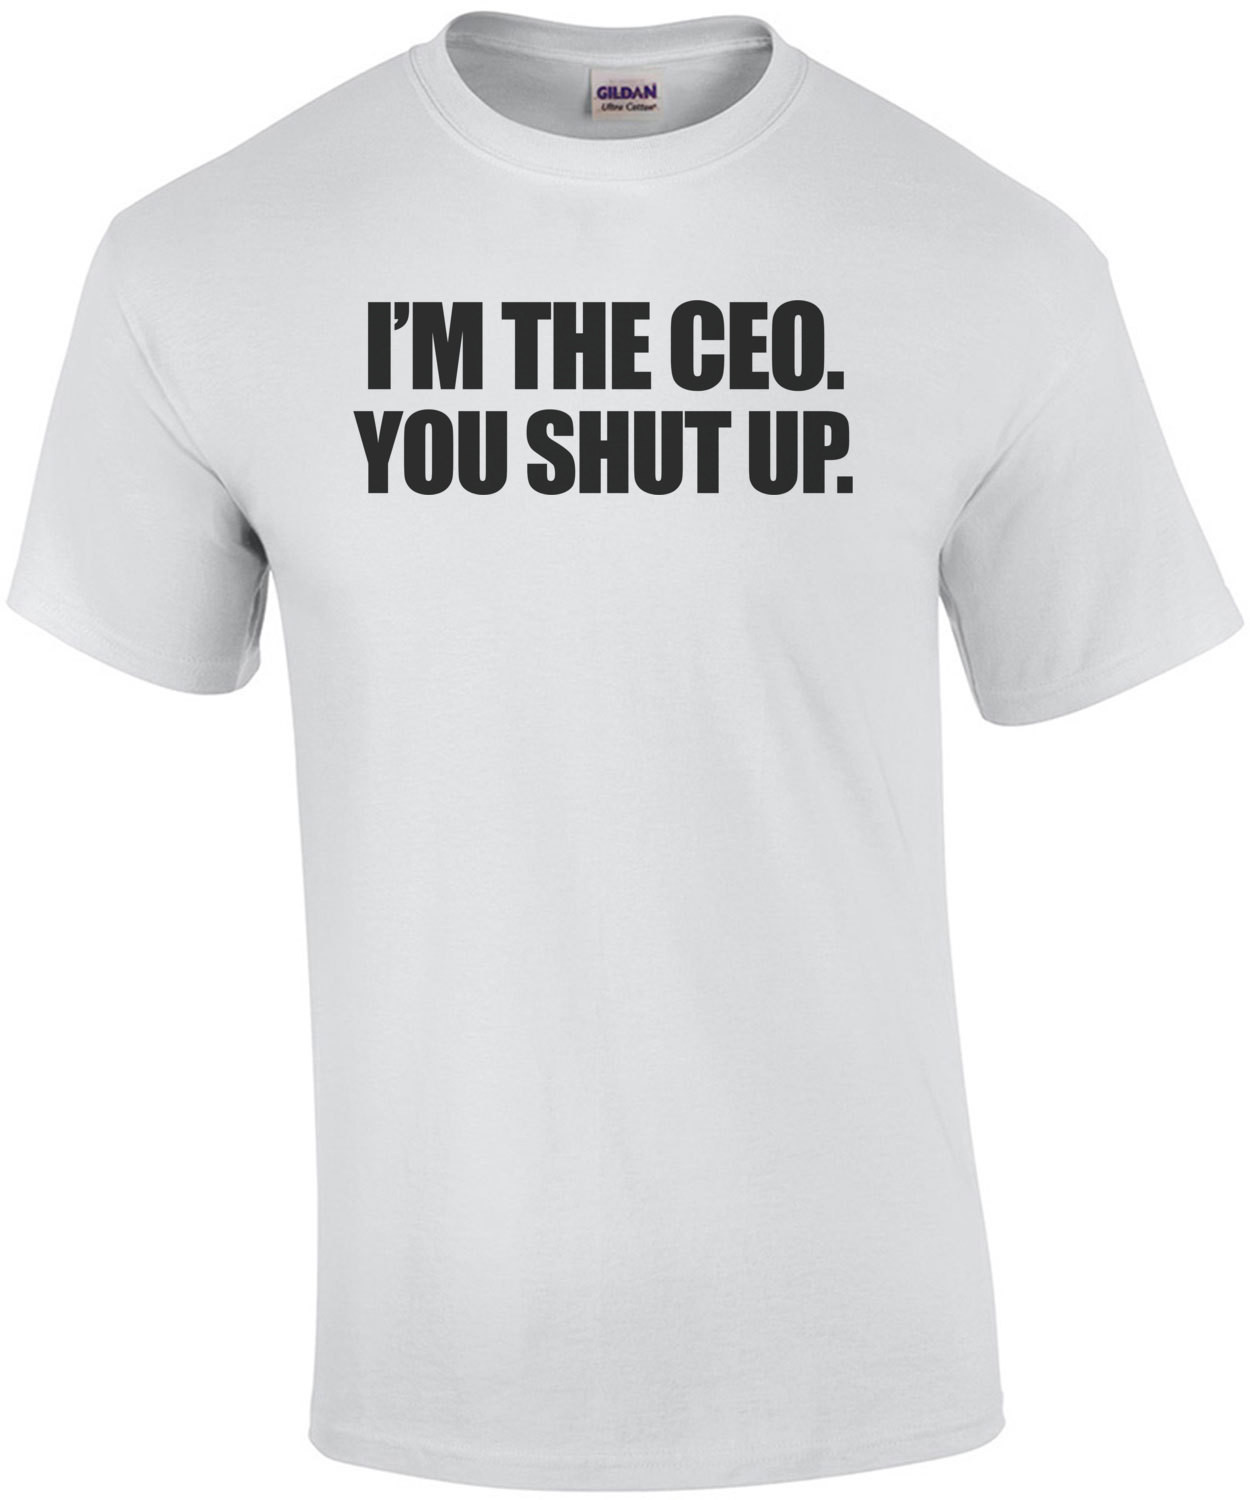 I'm The Ceo You Shut Up T-Shirt